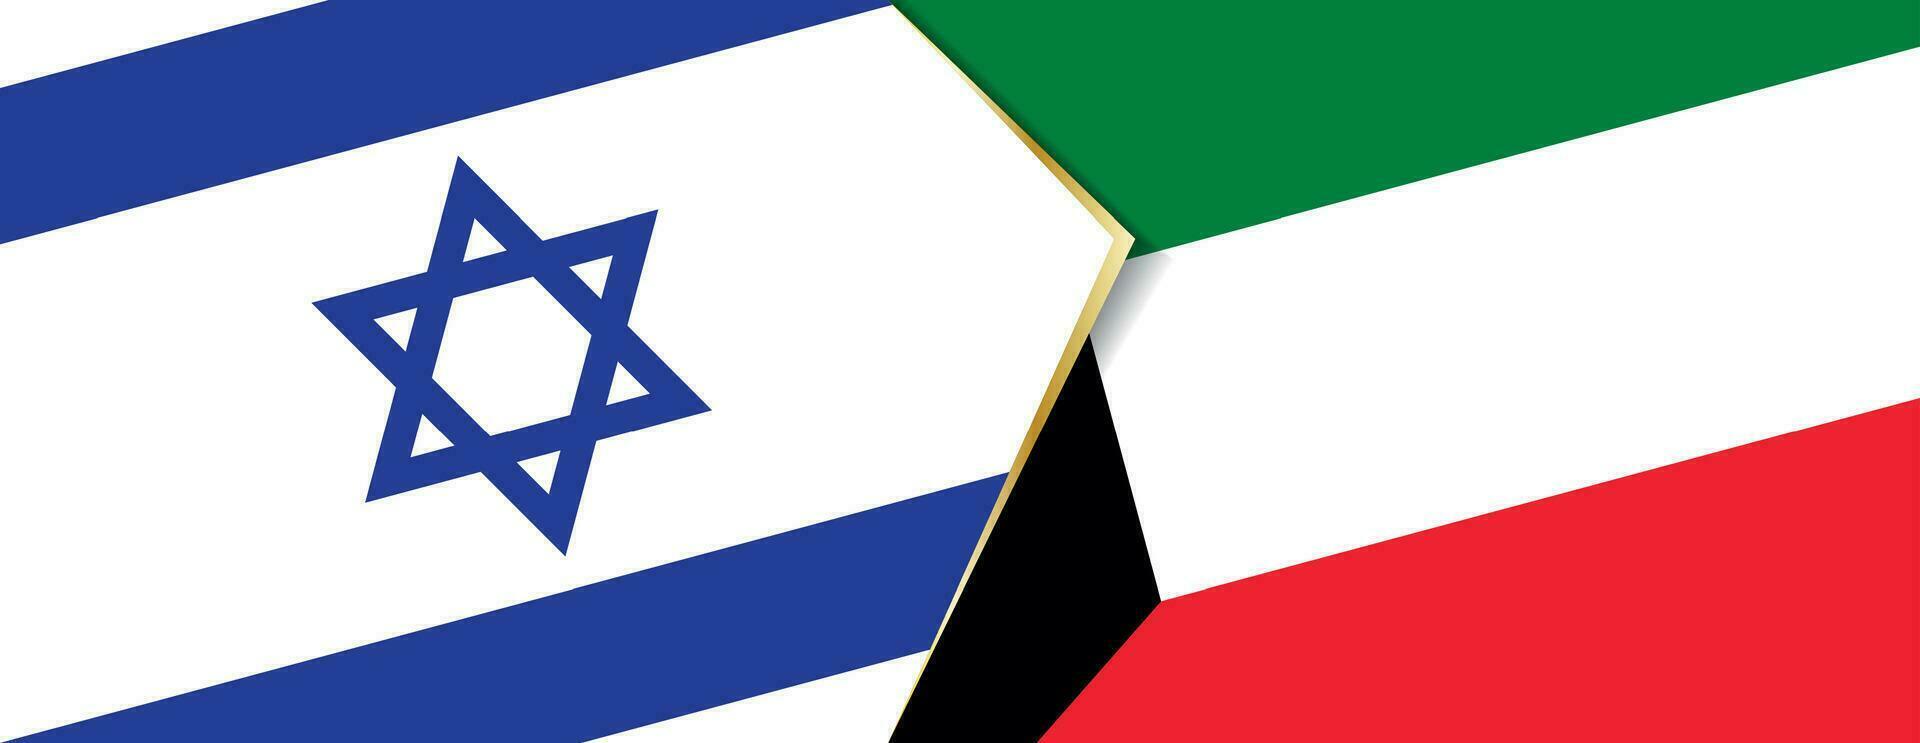 Israel e Kuwait bandeiras, dois vetor bandeiras.